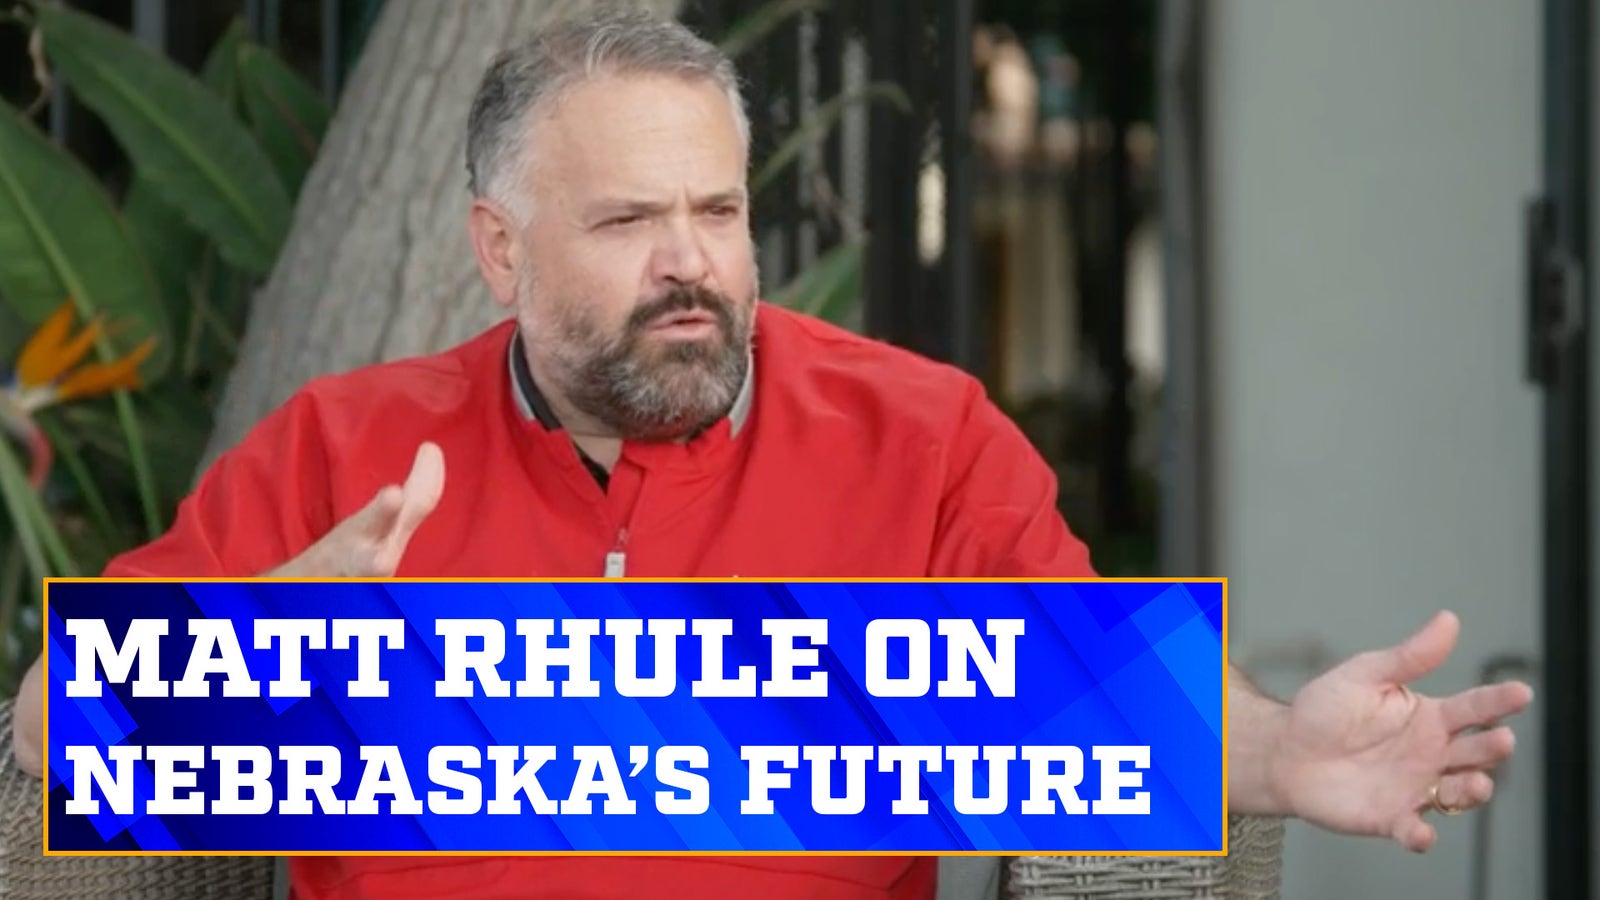 Matt Rhule explains how Nebraska football will grow & learning through failure